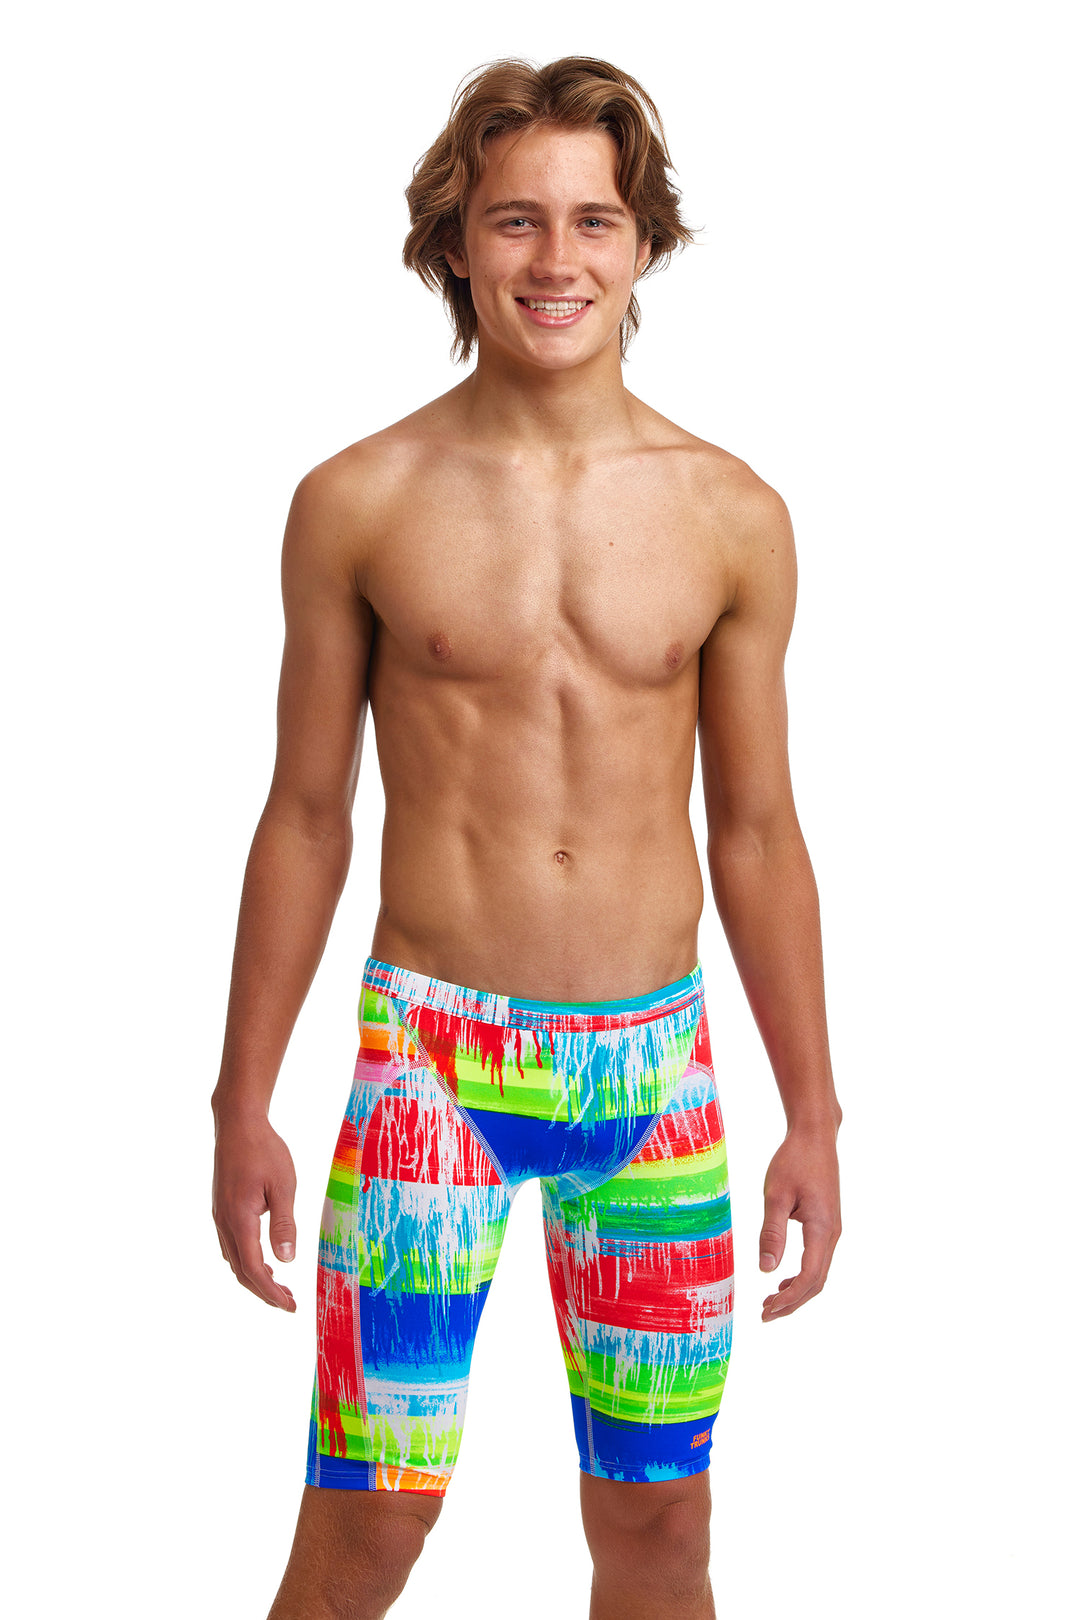 Dye Hard Training Jammer Half Spats Swimsuit FT37B - Boys